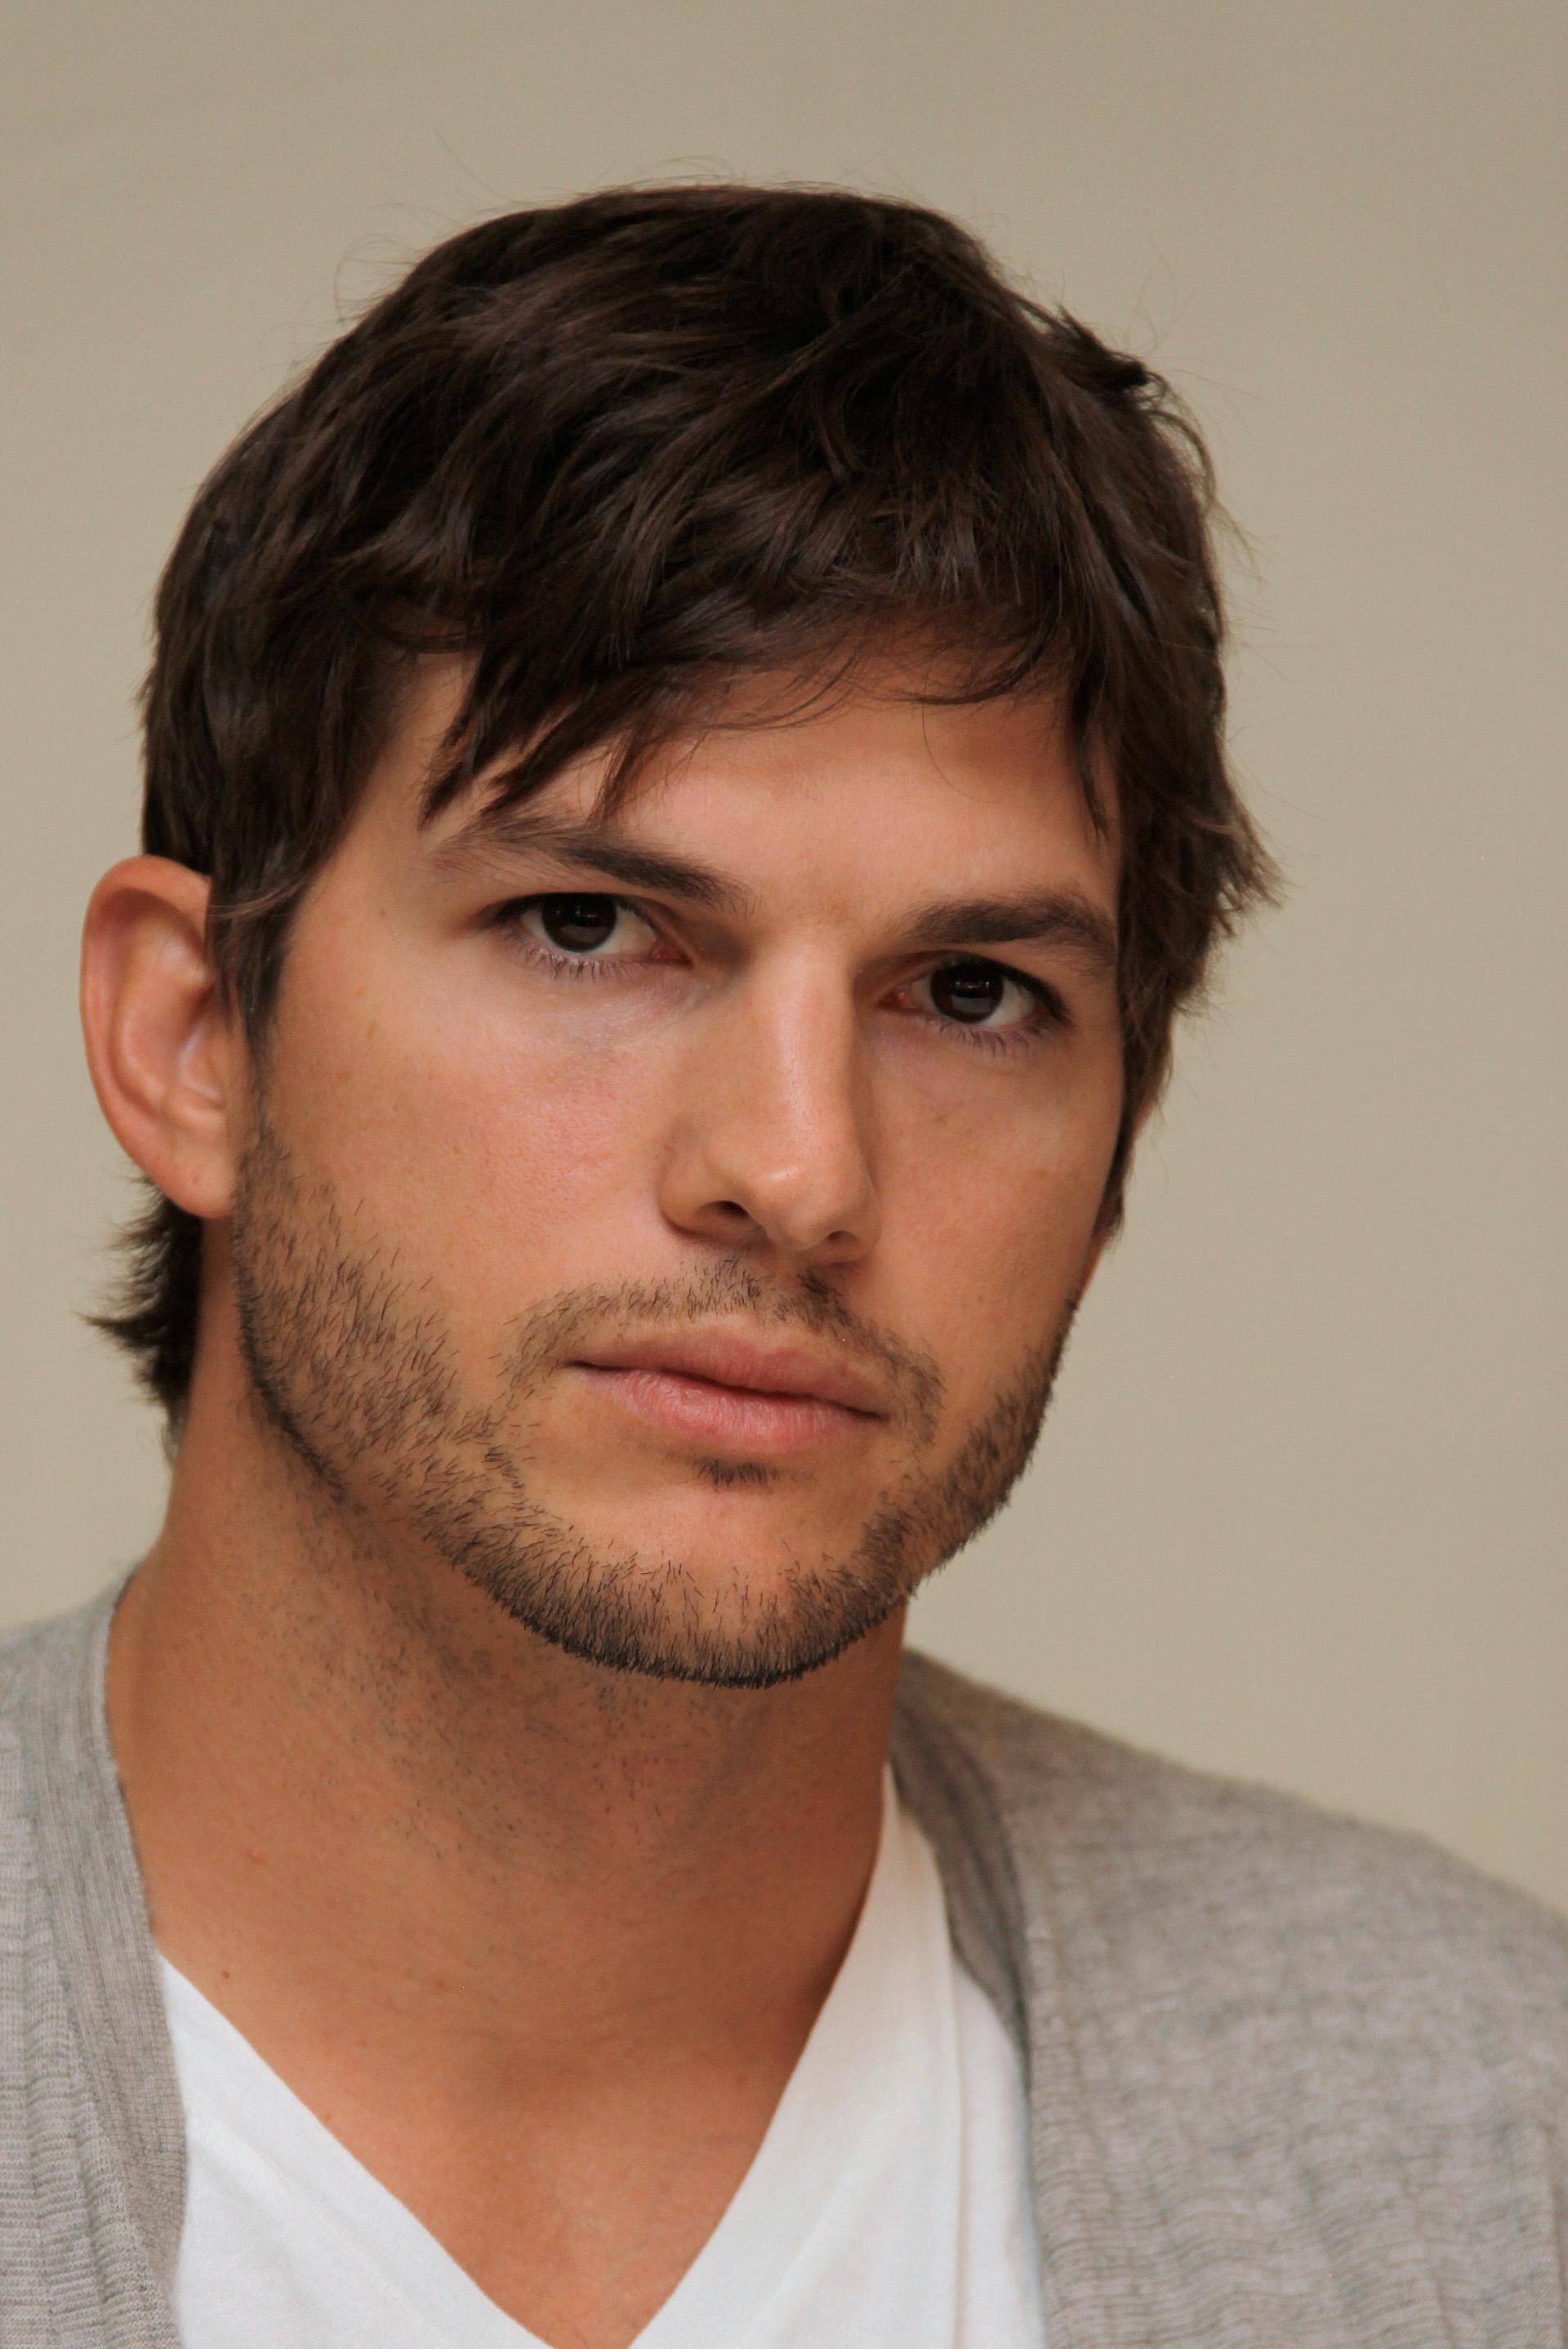 Ashton Kutcher attends "Jobs" junket - Los Angeles